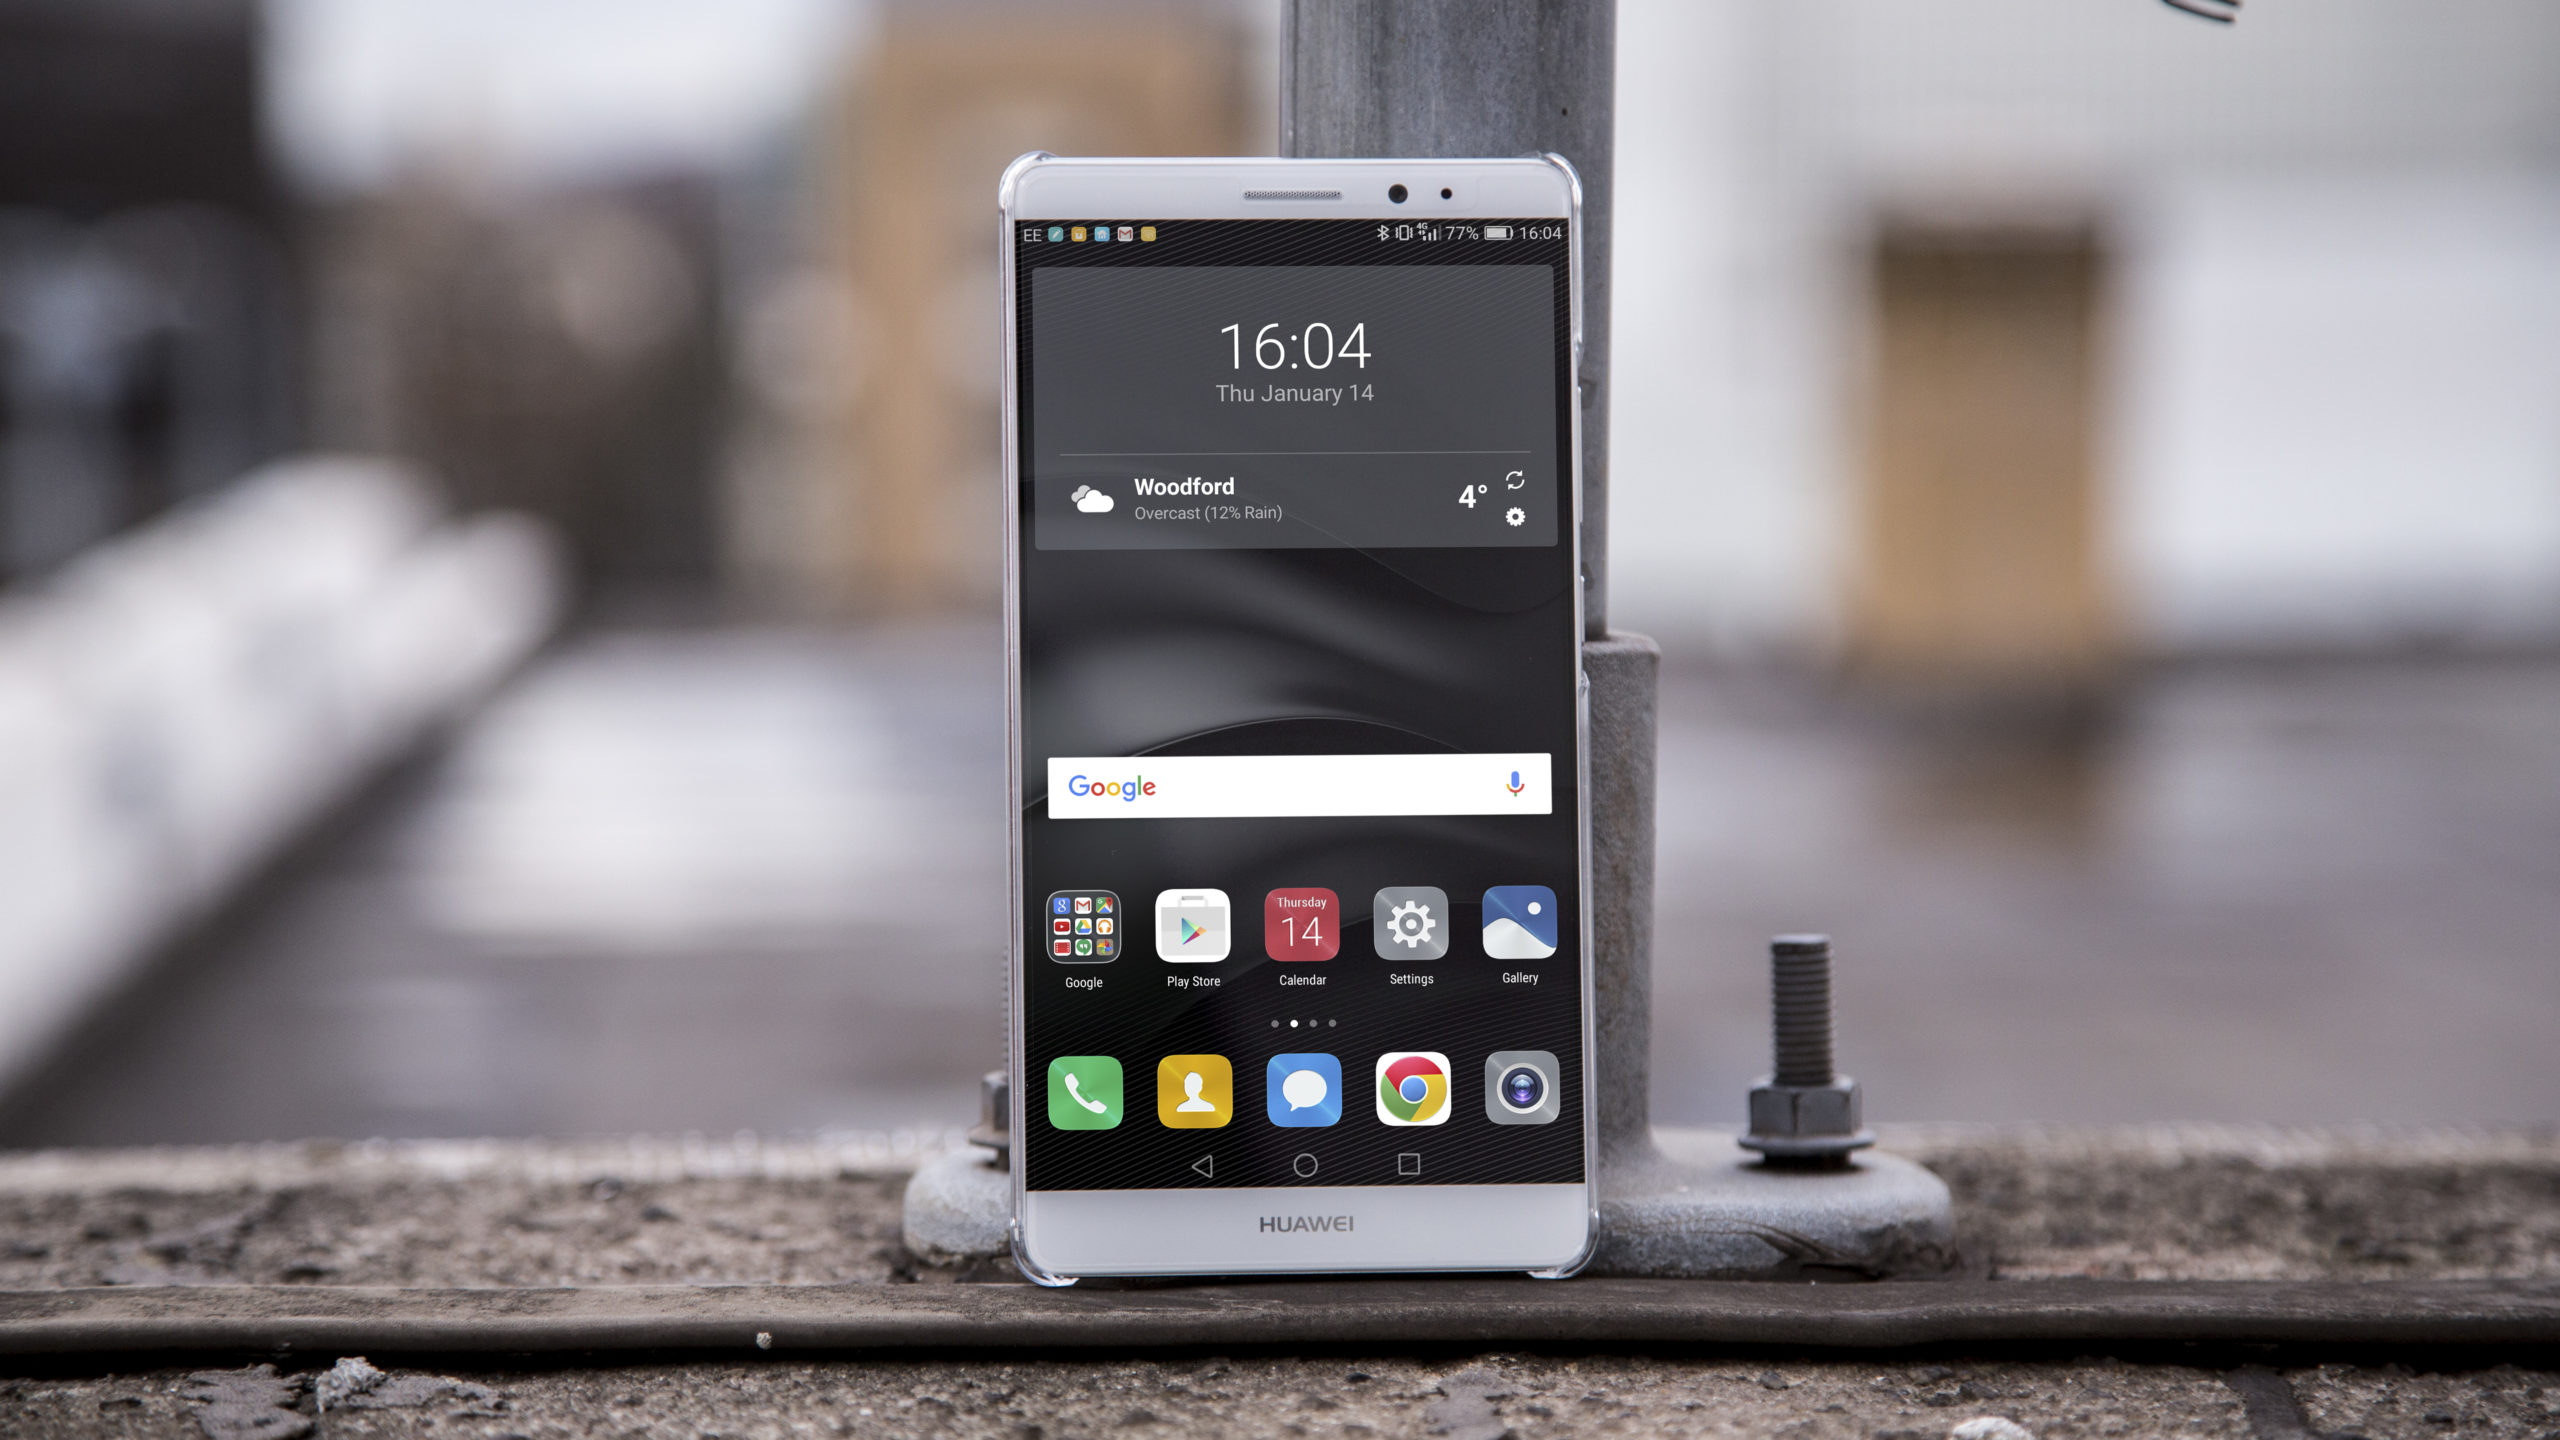 Pellen parachute heuvel Huawei Mate 8 review: A big phone that's almost brilliant